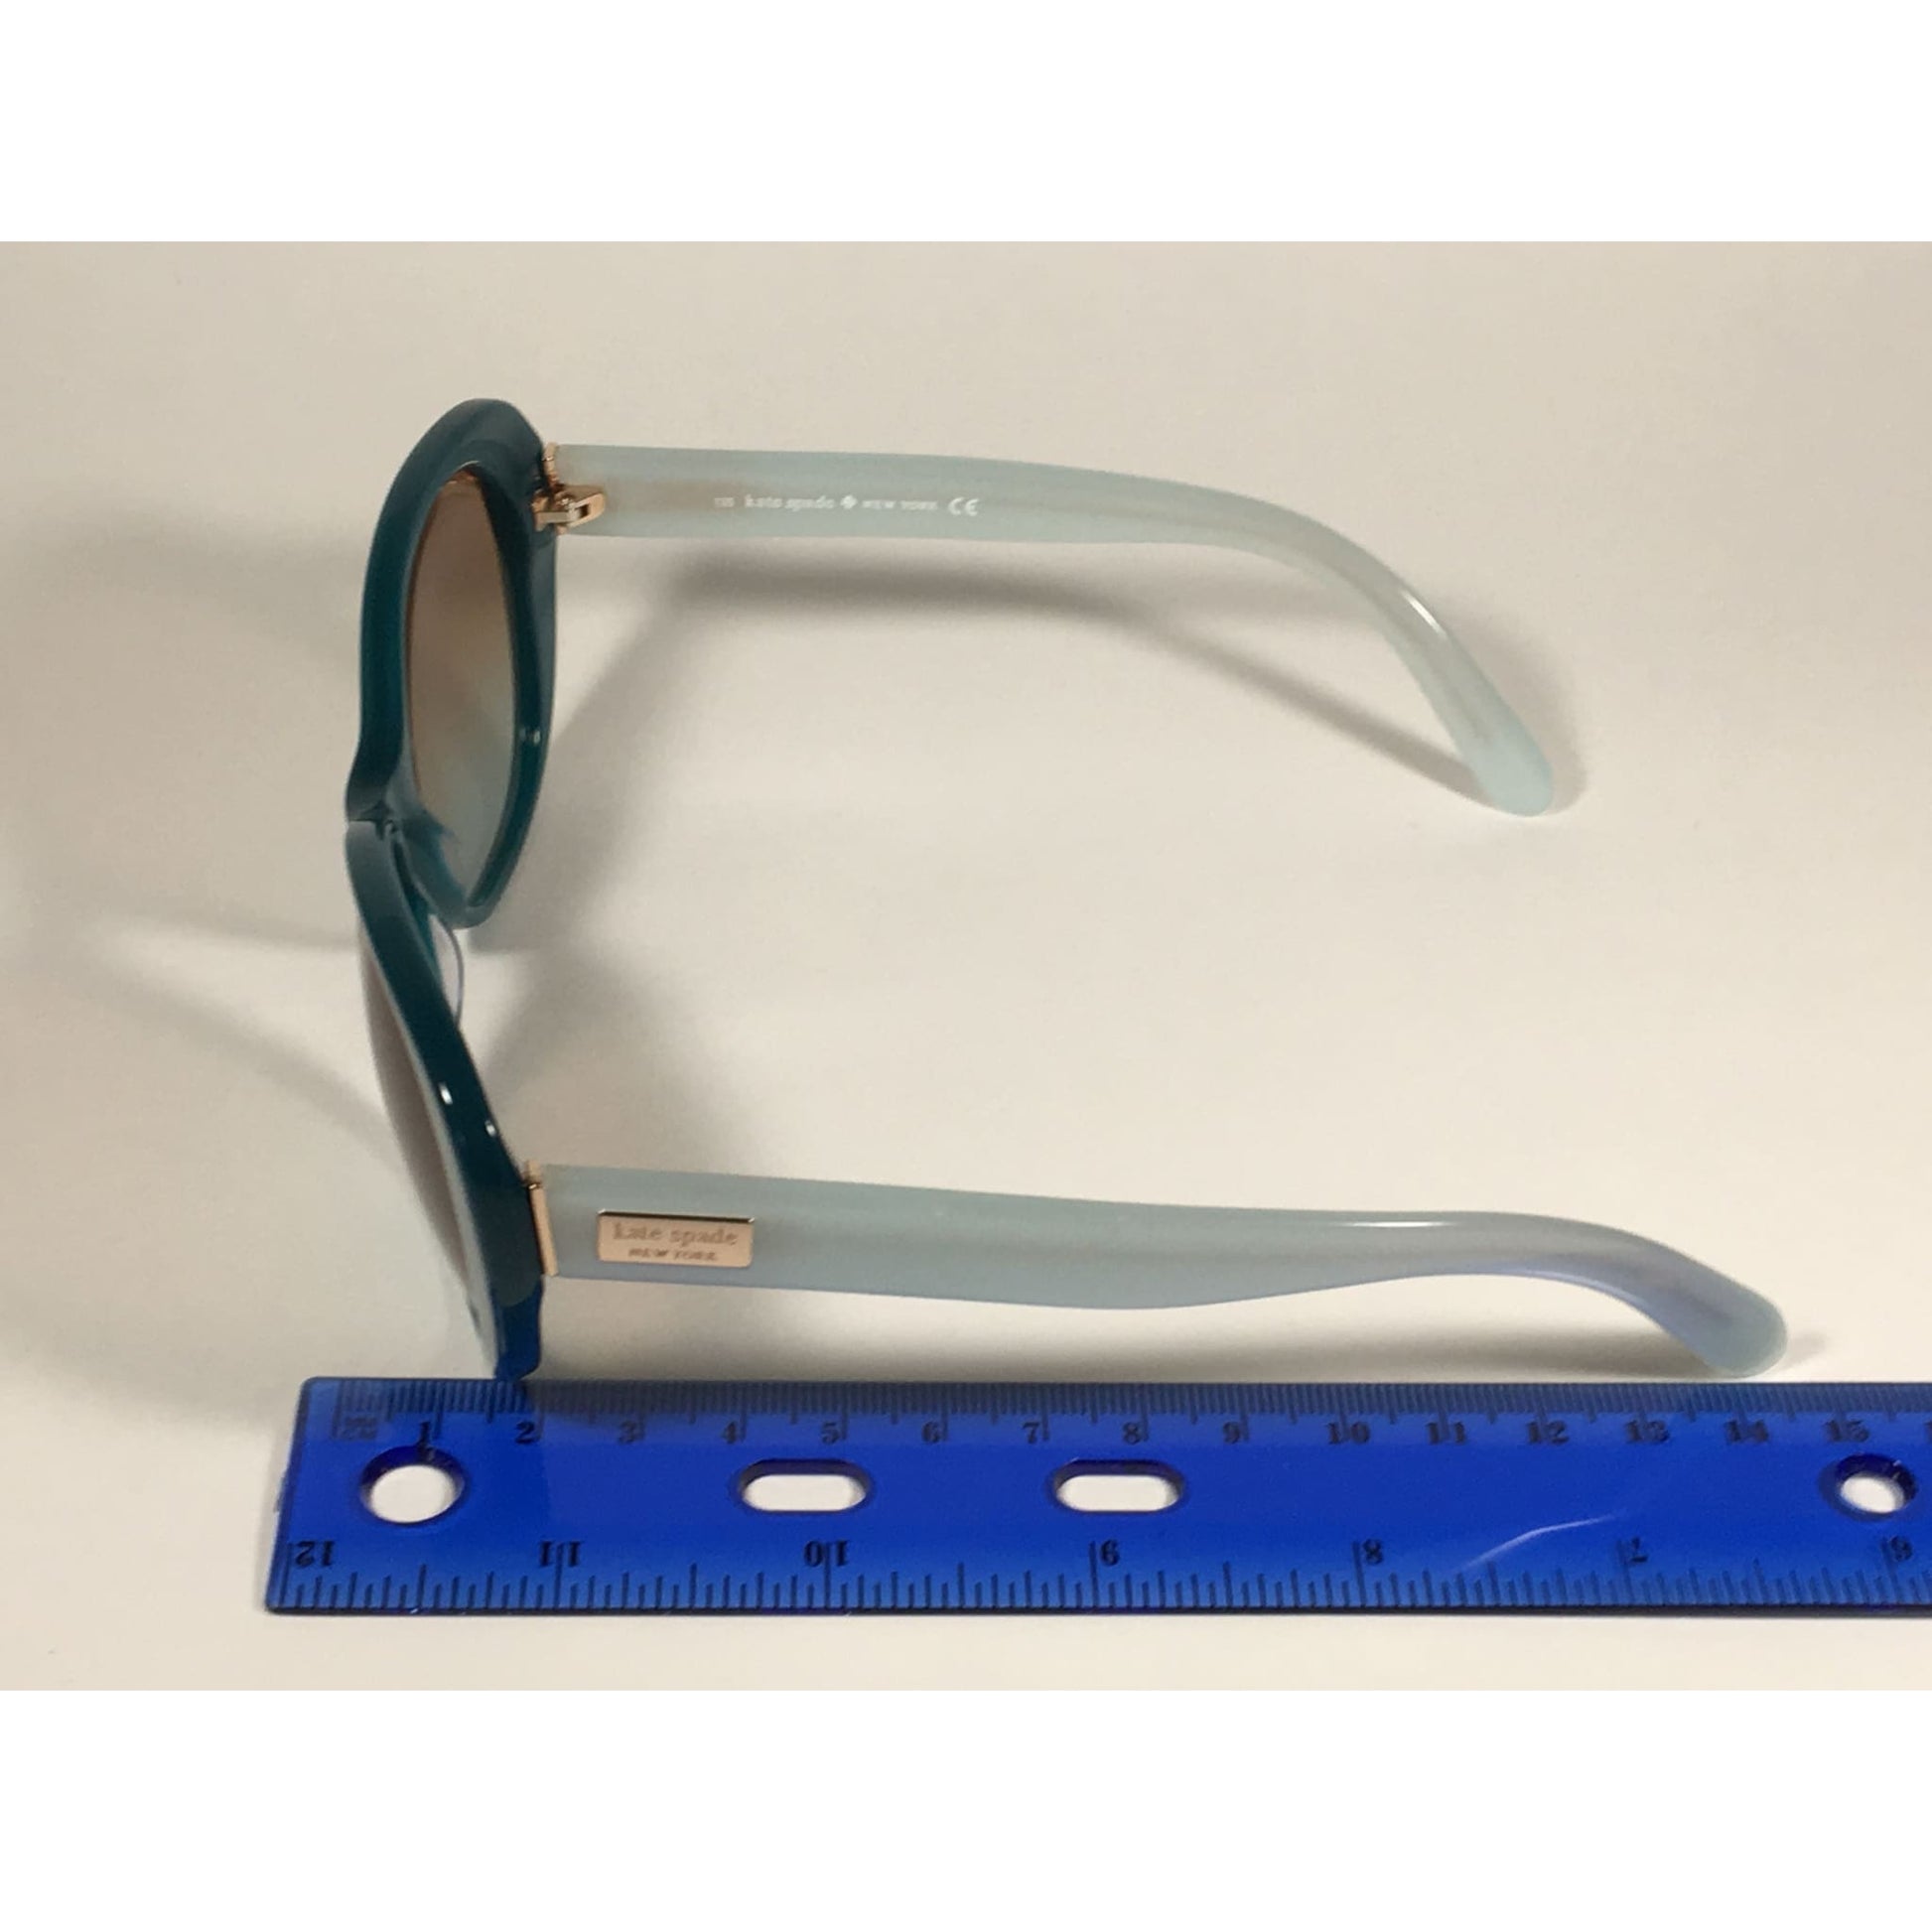 Kate Spade Emery Cat Eye Sunglasses Aqua Sea Glass Brown Gradient Lens Emery/s 0JGW WB - Sunglasses